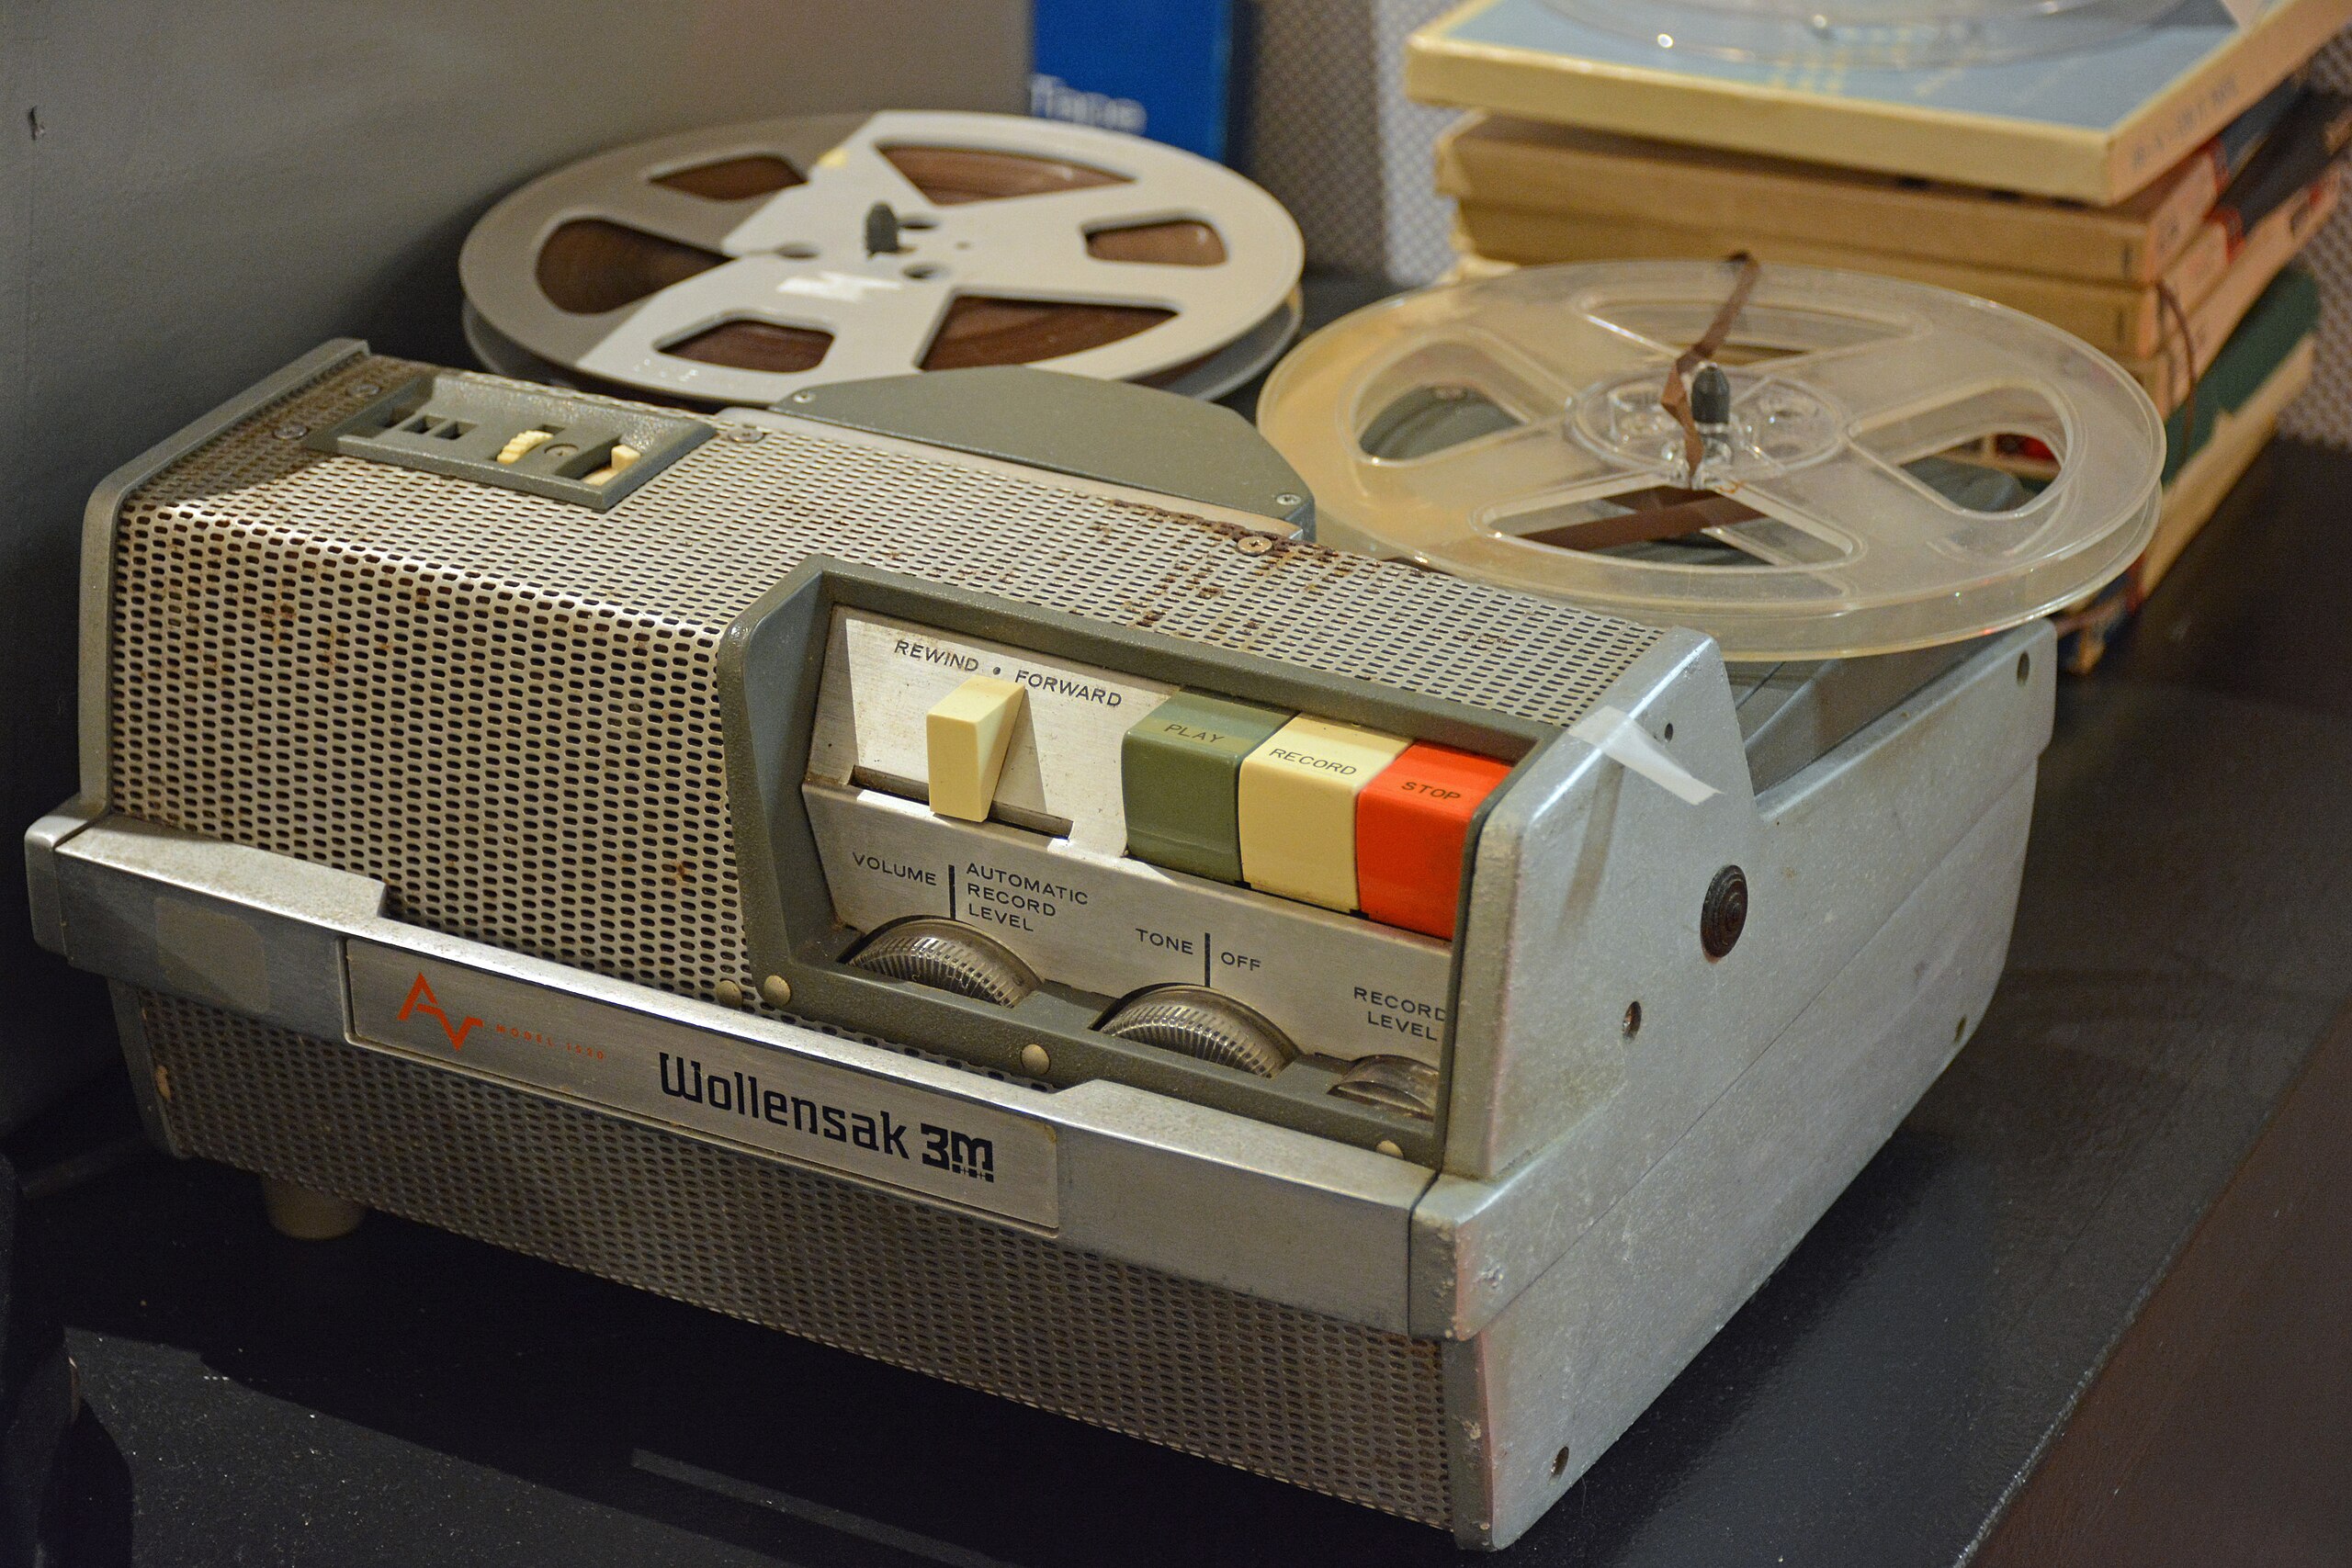 File:Wollensak portable reel-to-reel tape recorder.jpg - Wikipedia